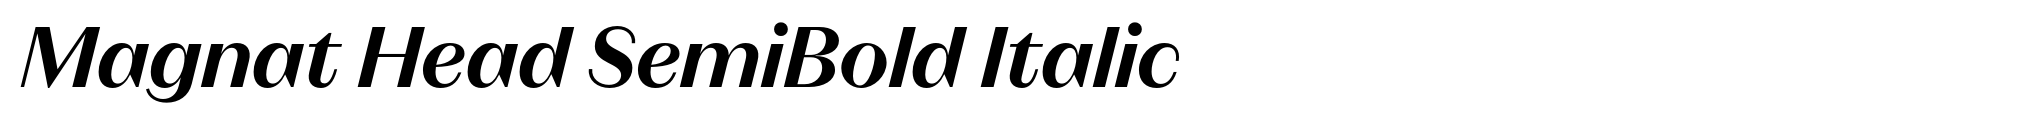 Magnat Head SemiBold Italic image